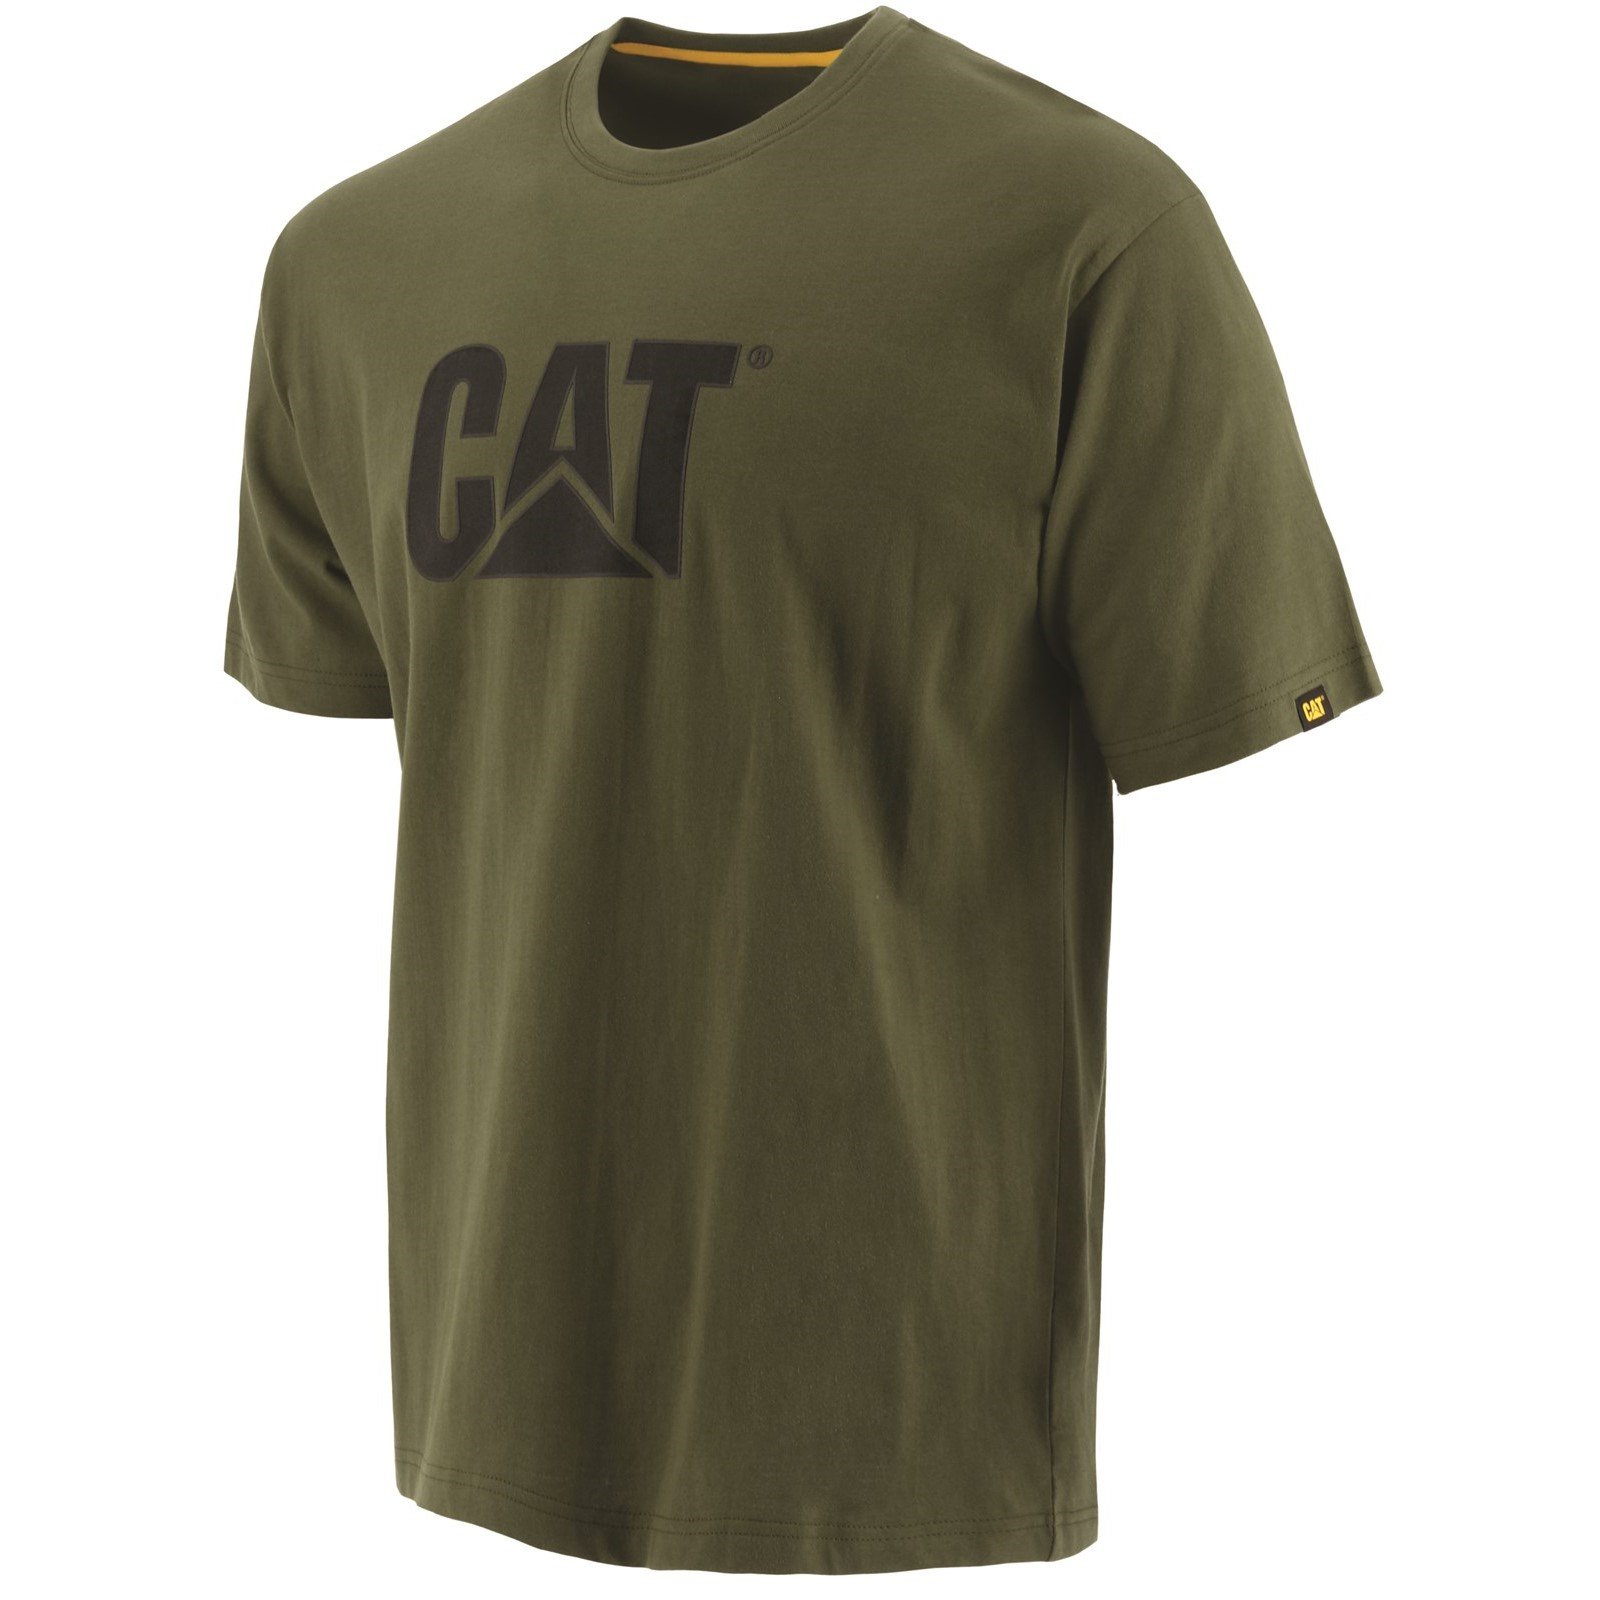 Caterpillar Men's Trademark Logo T-Shirt Various Colours 25301-42086 - Chive Lge